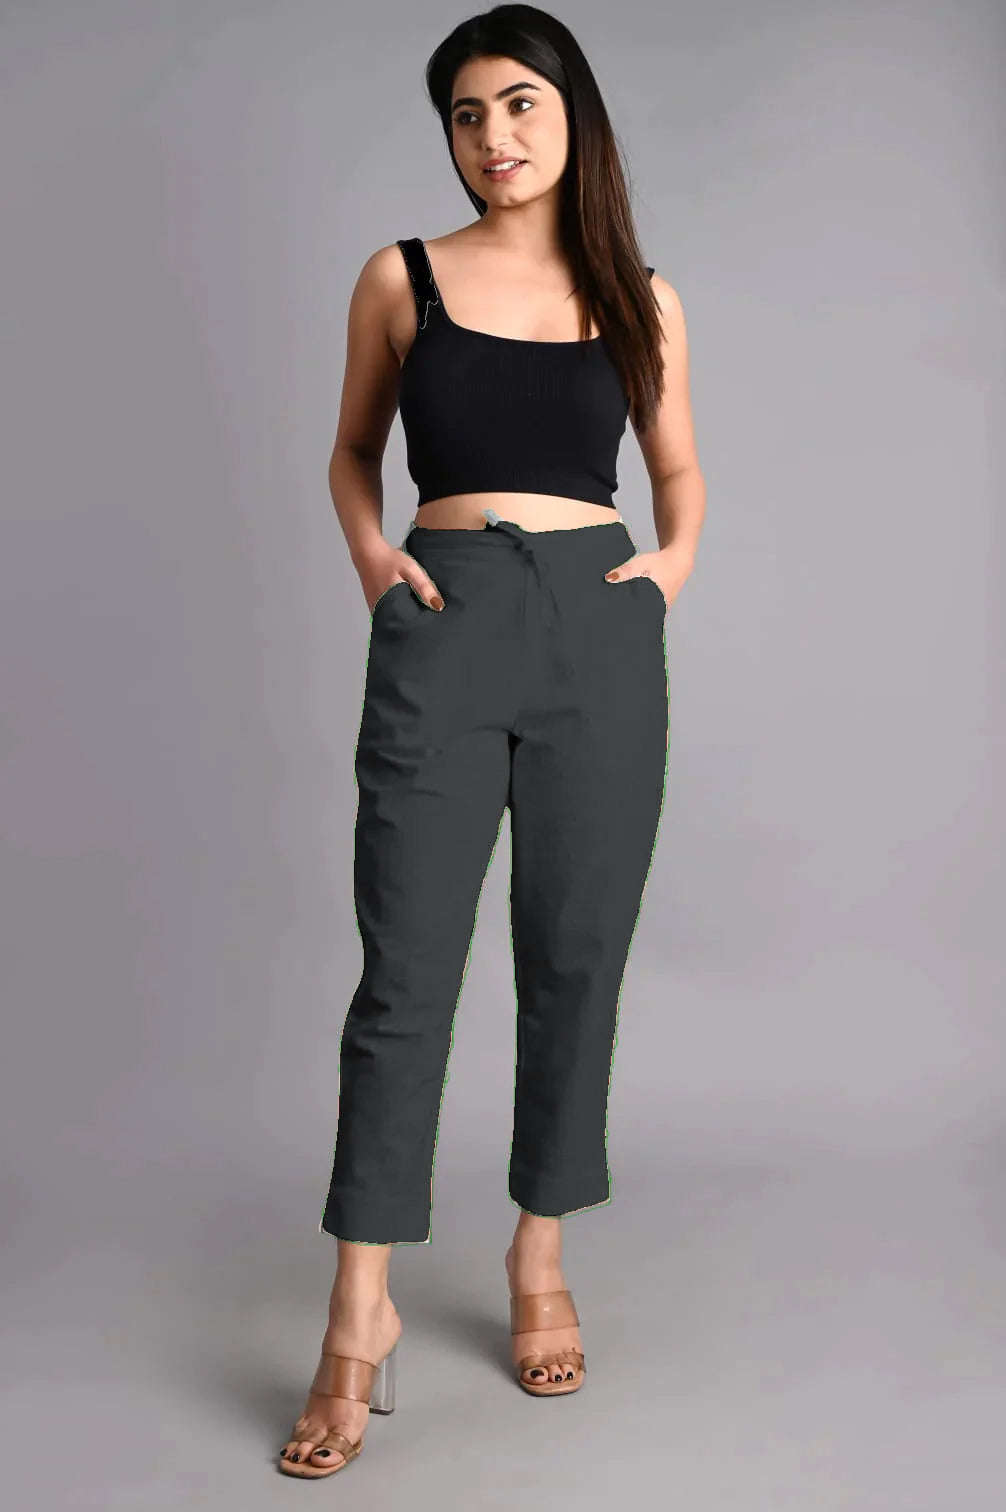 Effortless Elegance: Khadi Grey Women's Pants for Timeless Style